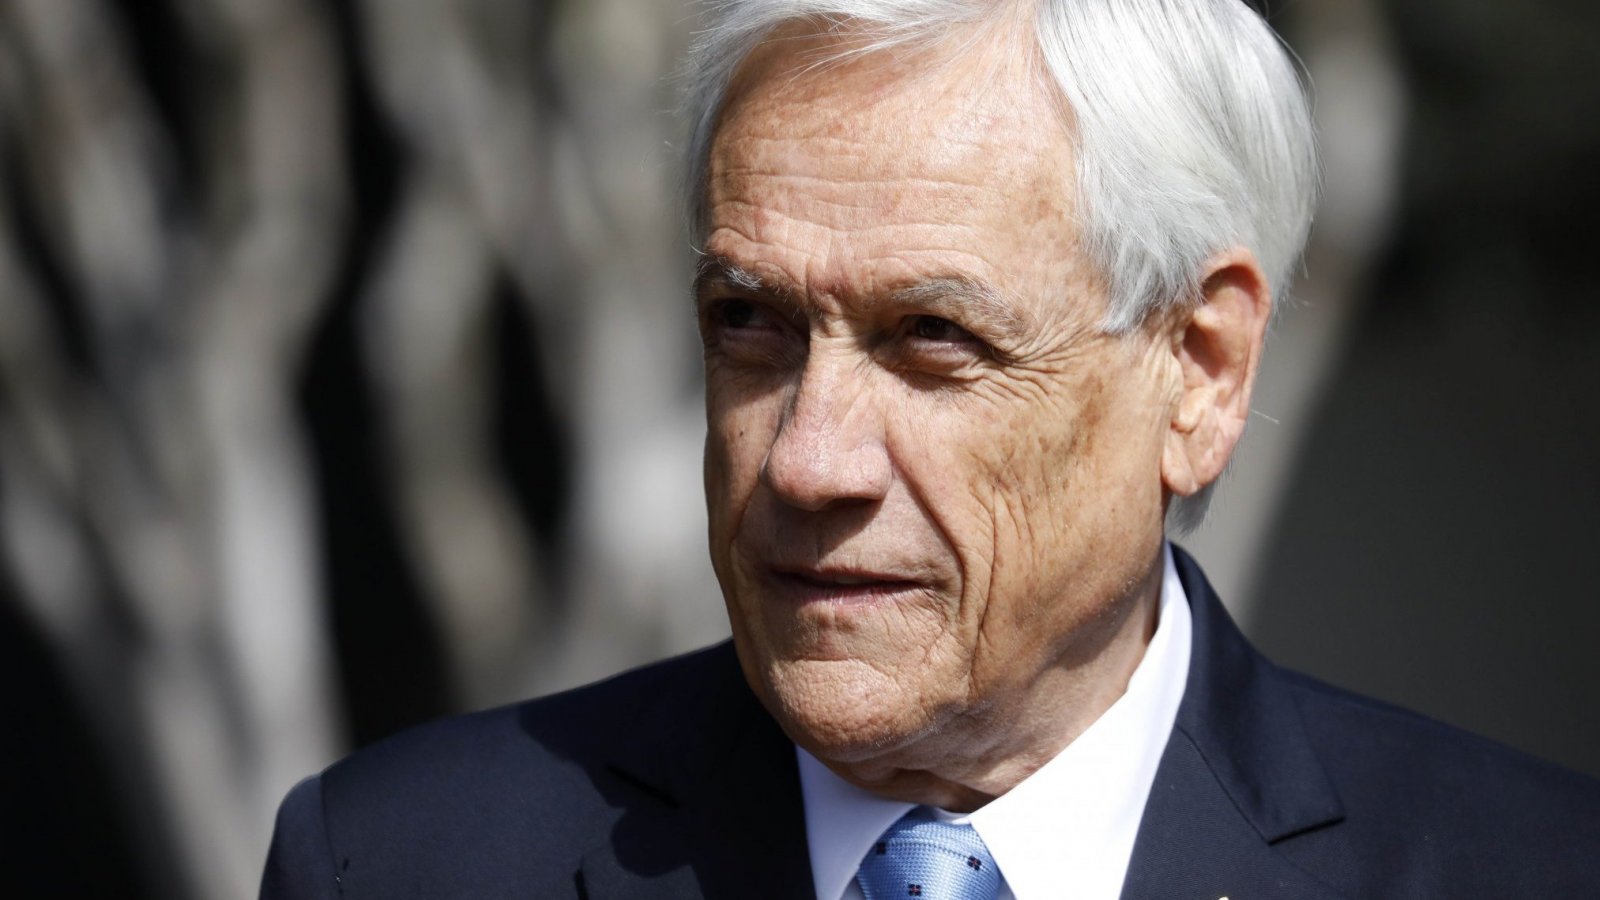 Piñera reiteró haber sido víctima de golpe de Estado "no tradicional"